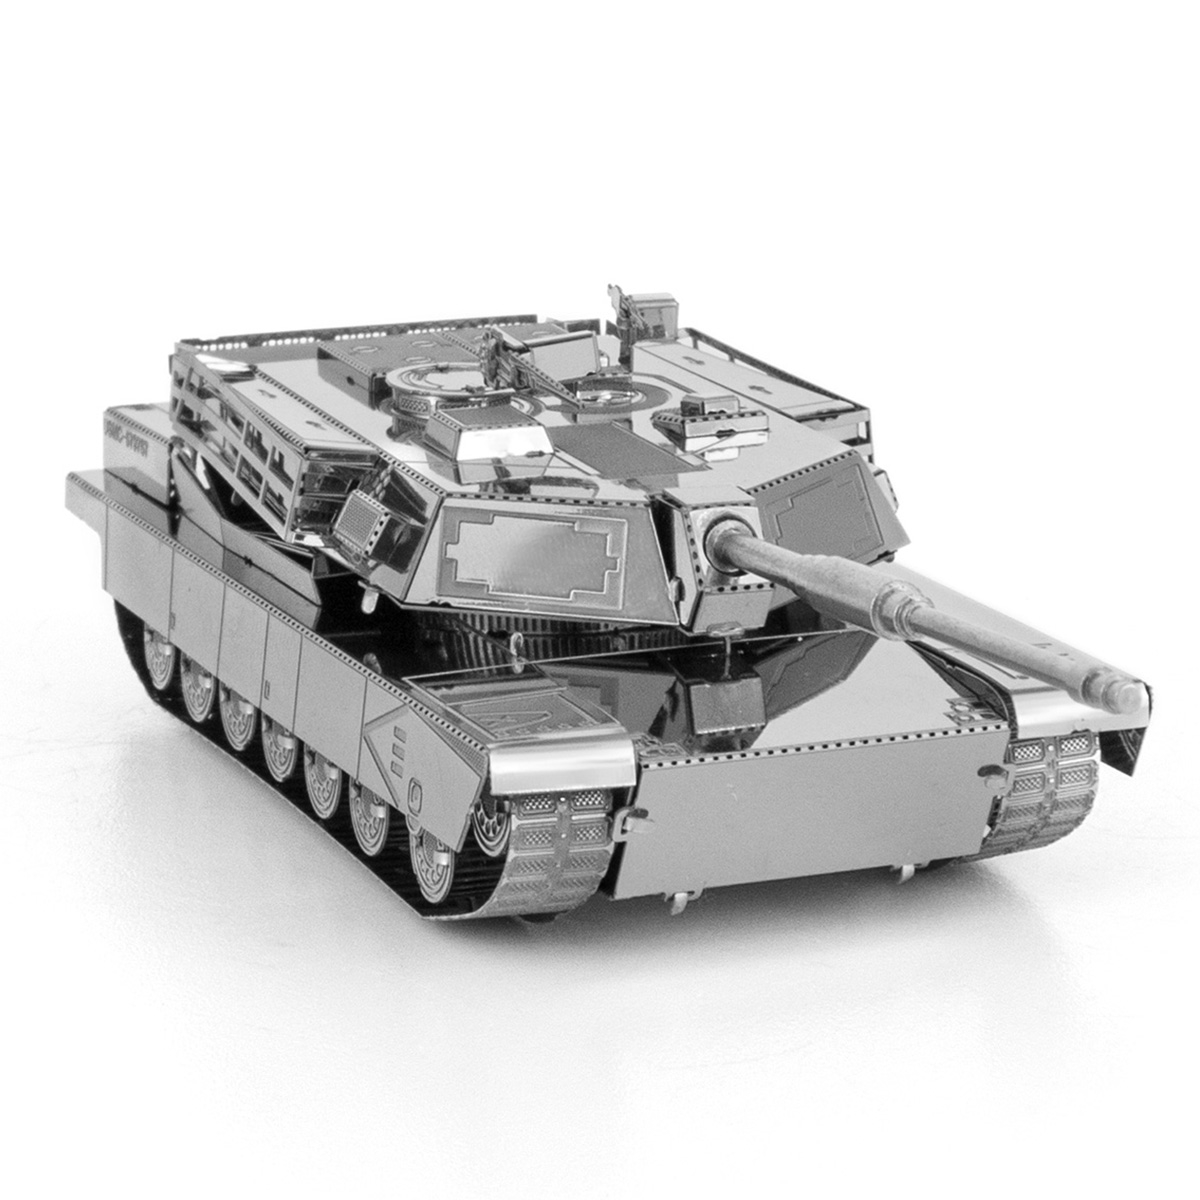 Metal Earth Tanks M1 Abrams Tanks 3d Metal Model Kits